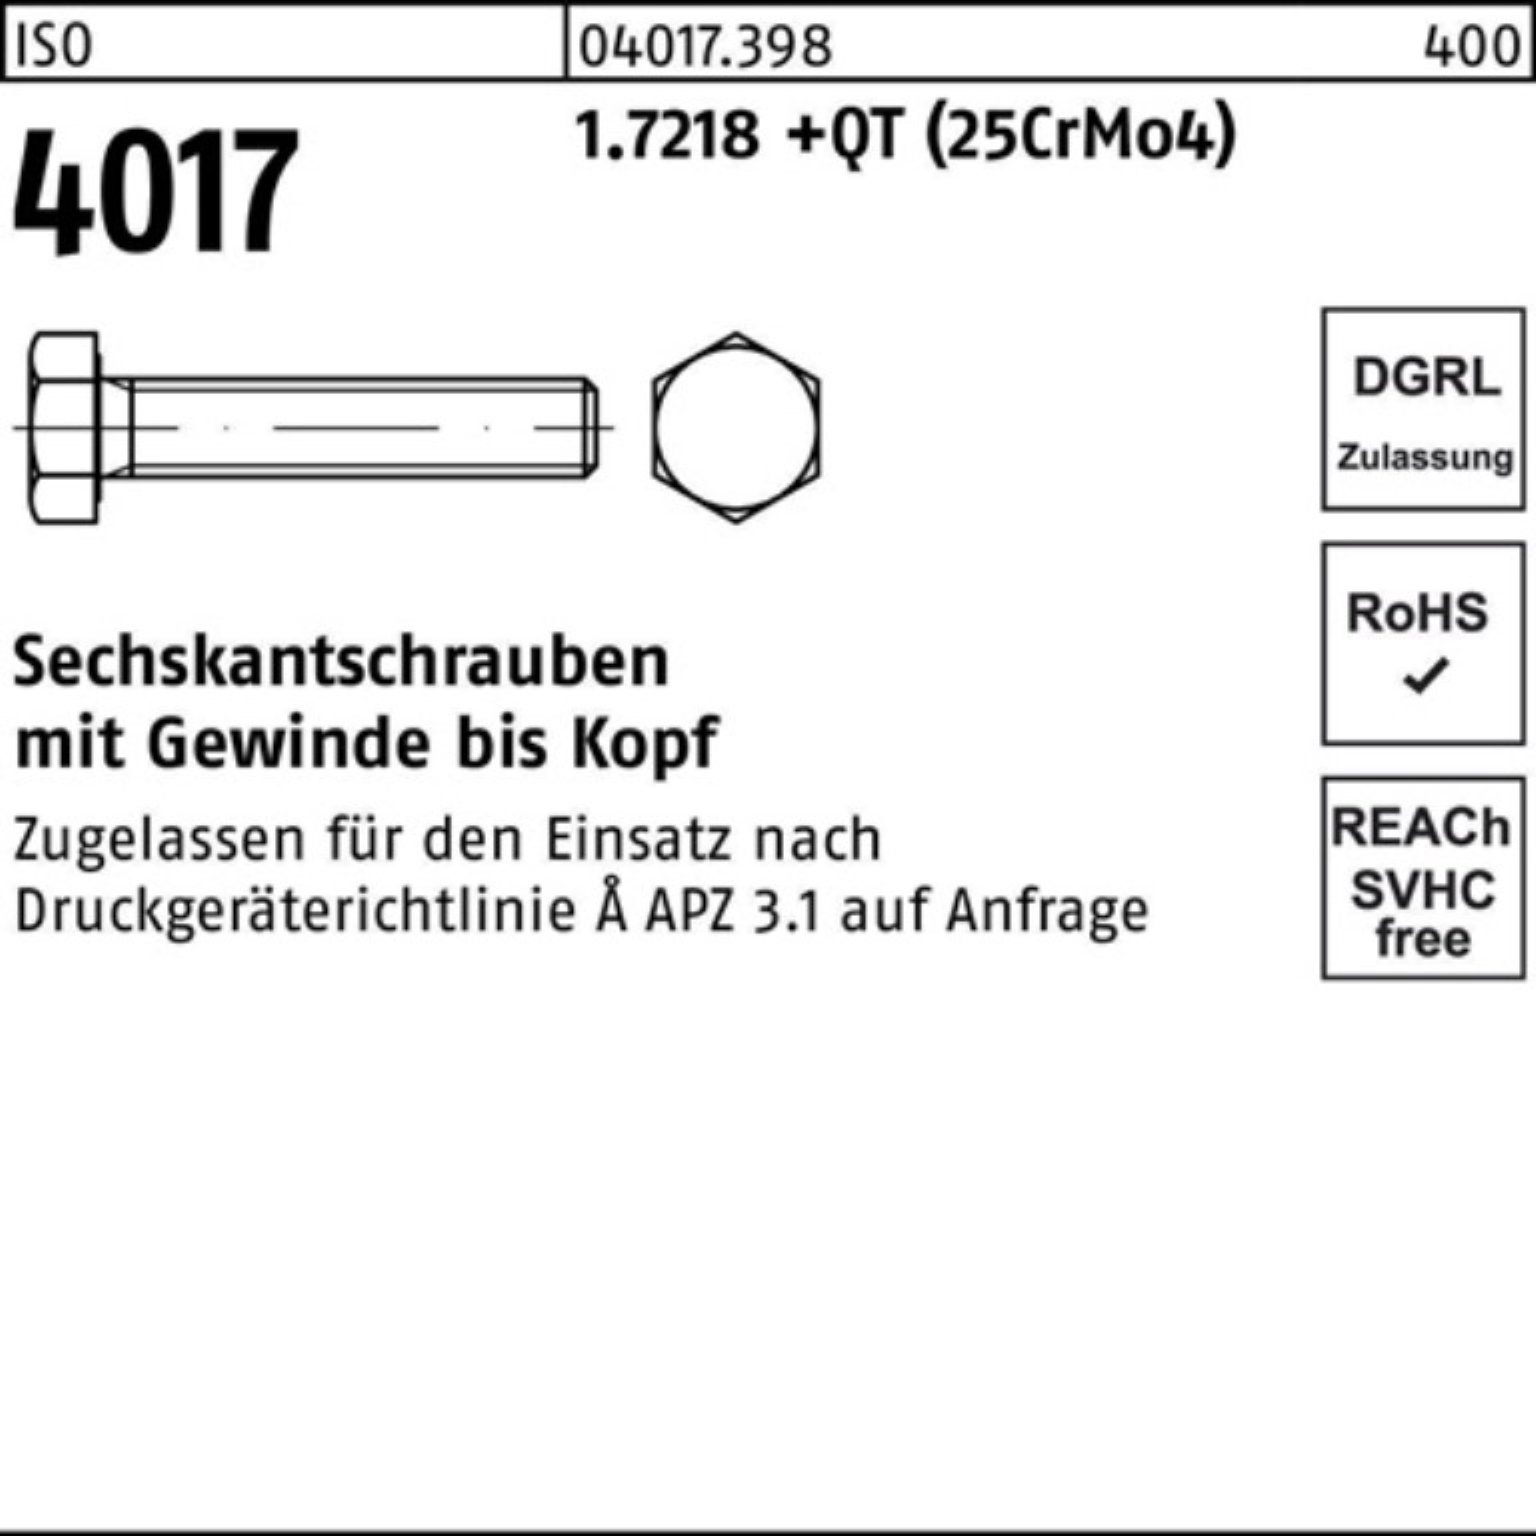 Bufab Sechskantschraube 100er Pack Sechskantschraube VG 120 1.7218 +QT M16x (25CrMo4) ISO 4017